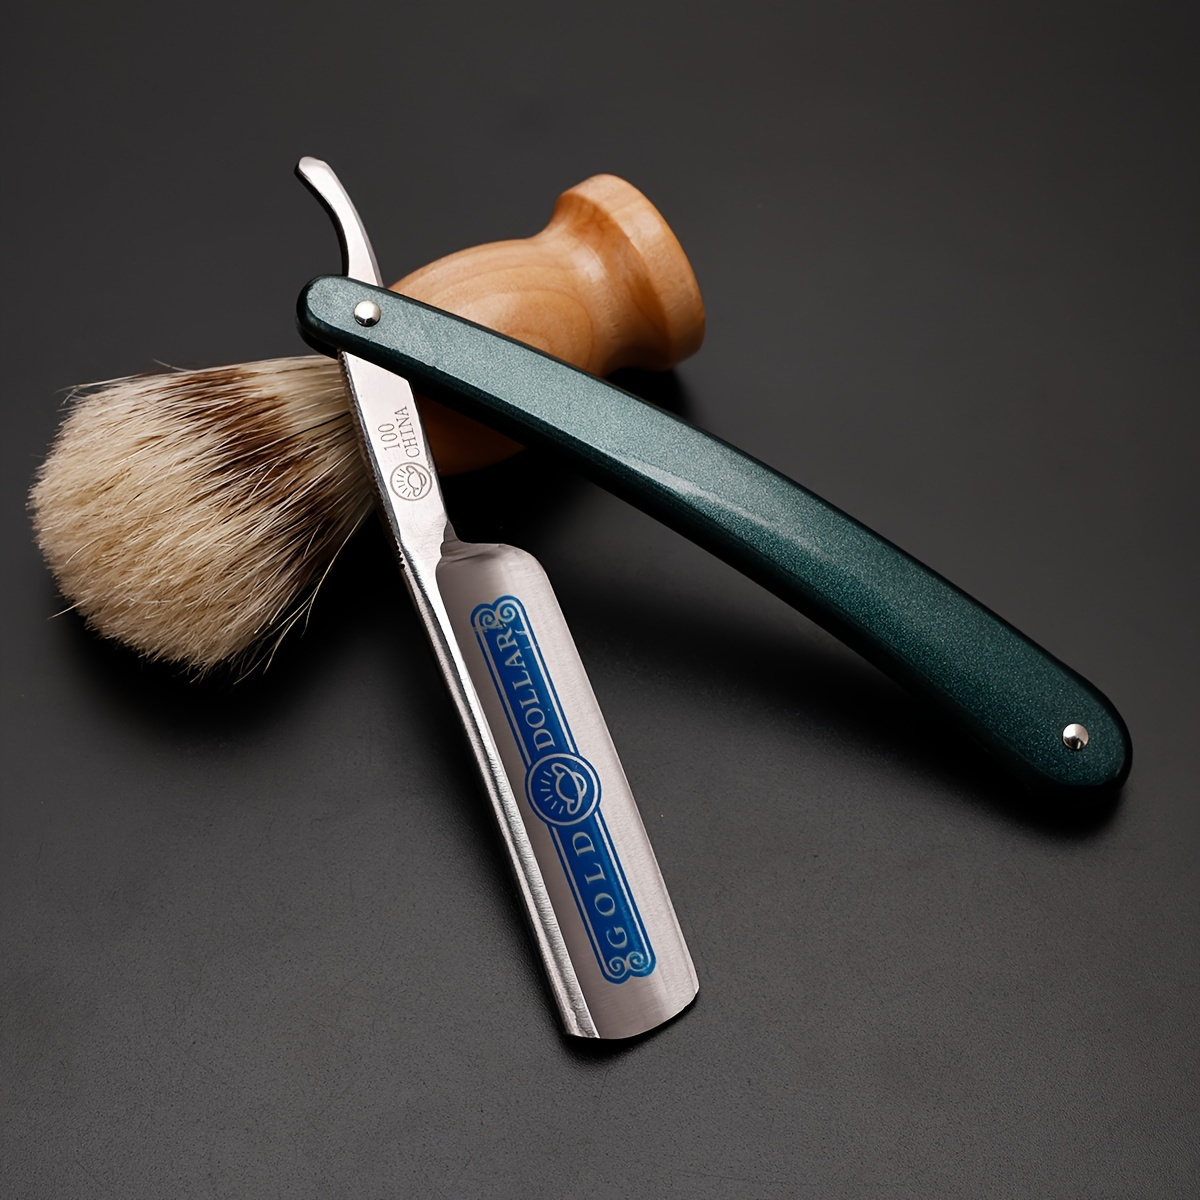 

Gold Dollar Straight Razor With Ergonomic Anti-slip Handle And Shaving Brush - Professional Barber's Manual Shaving Kit For Precision And Comfort